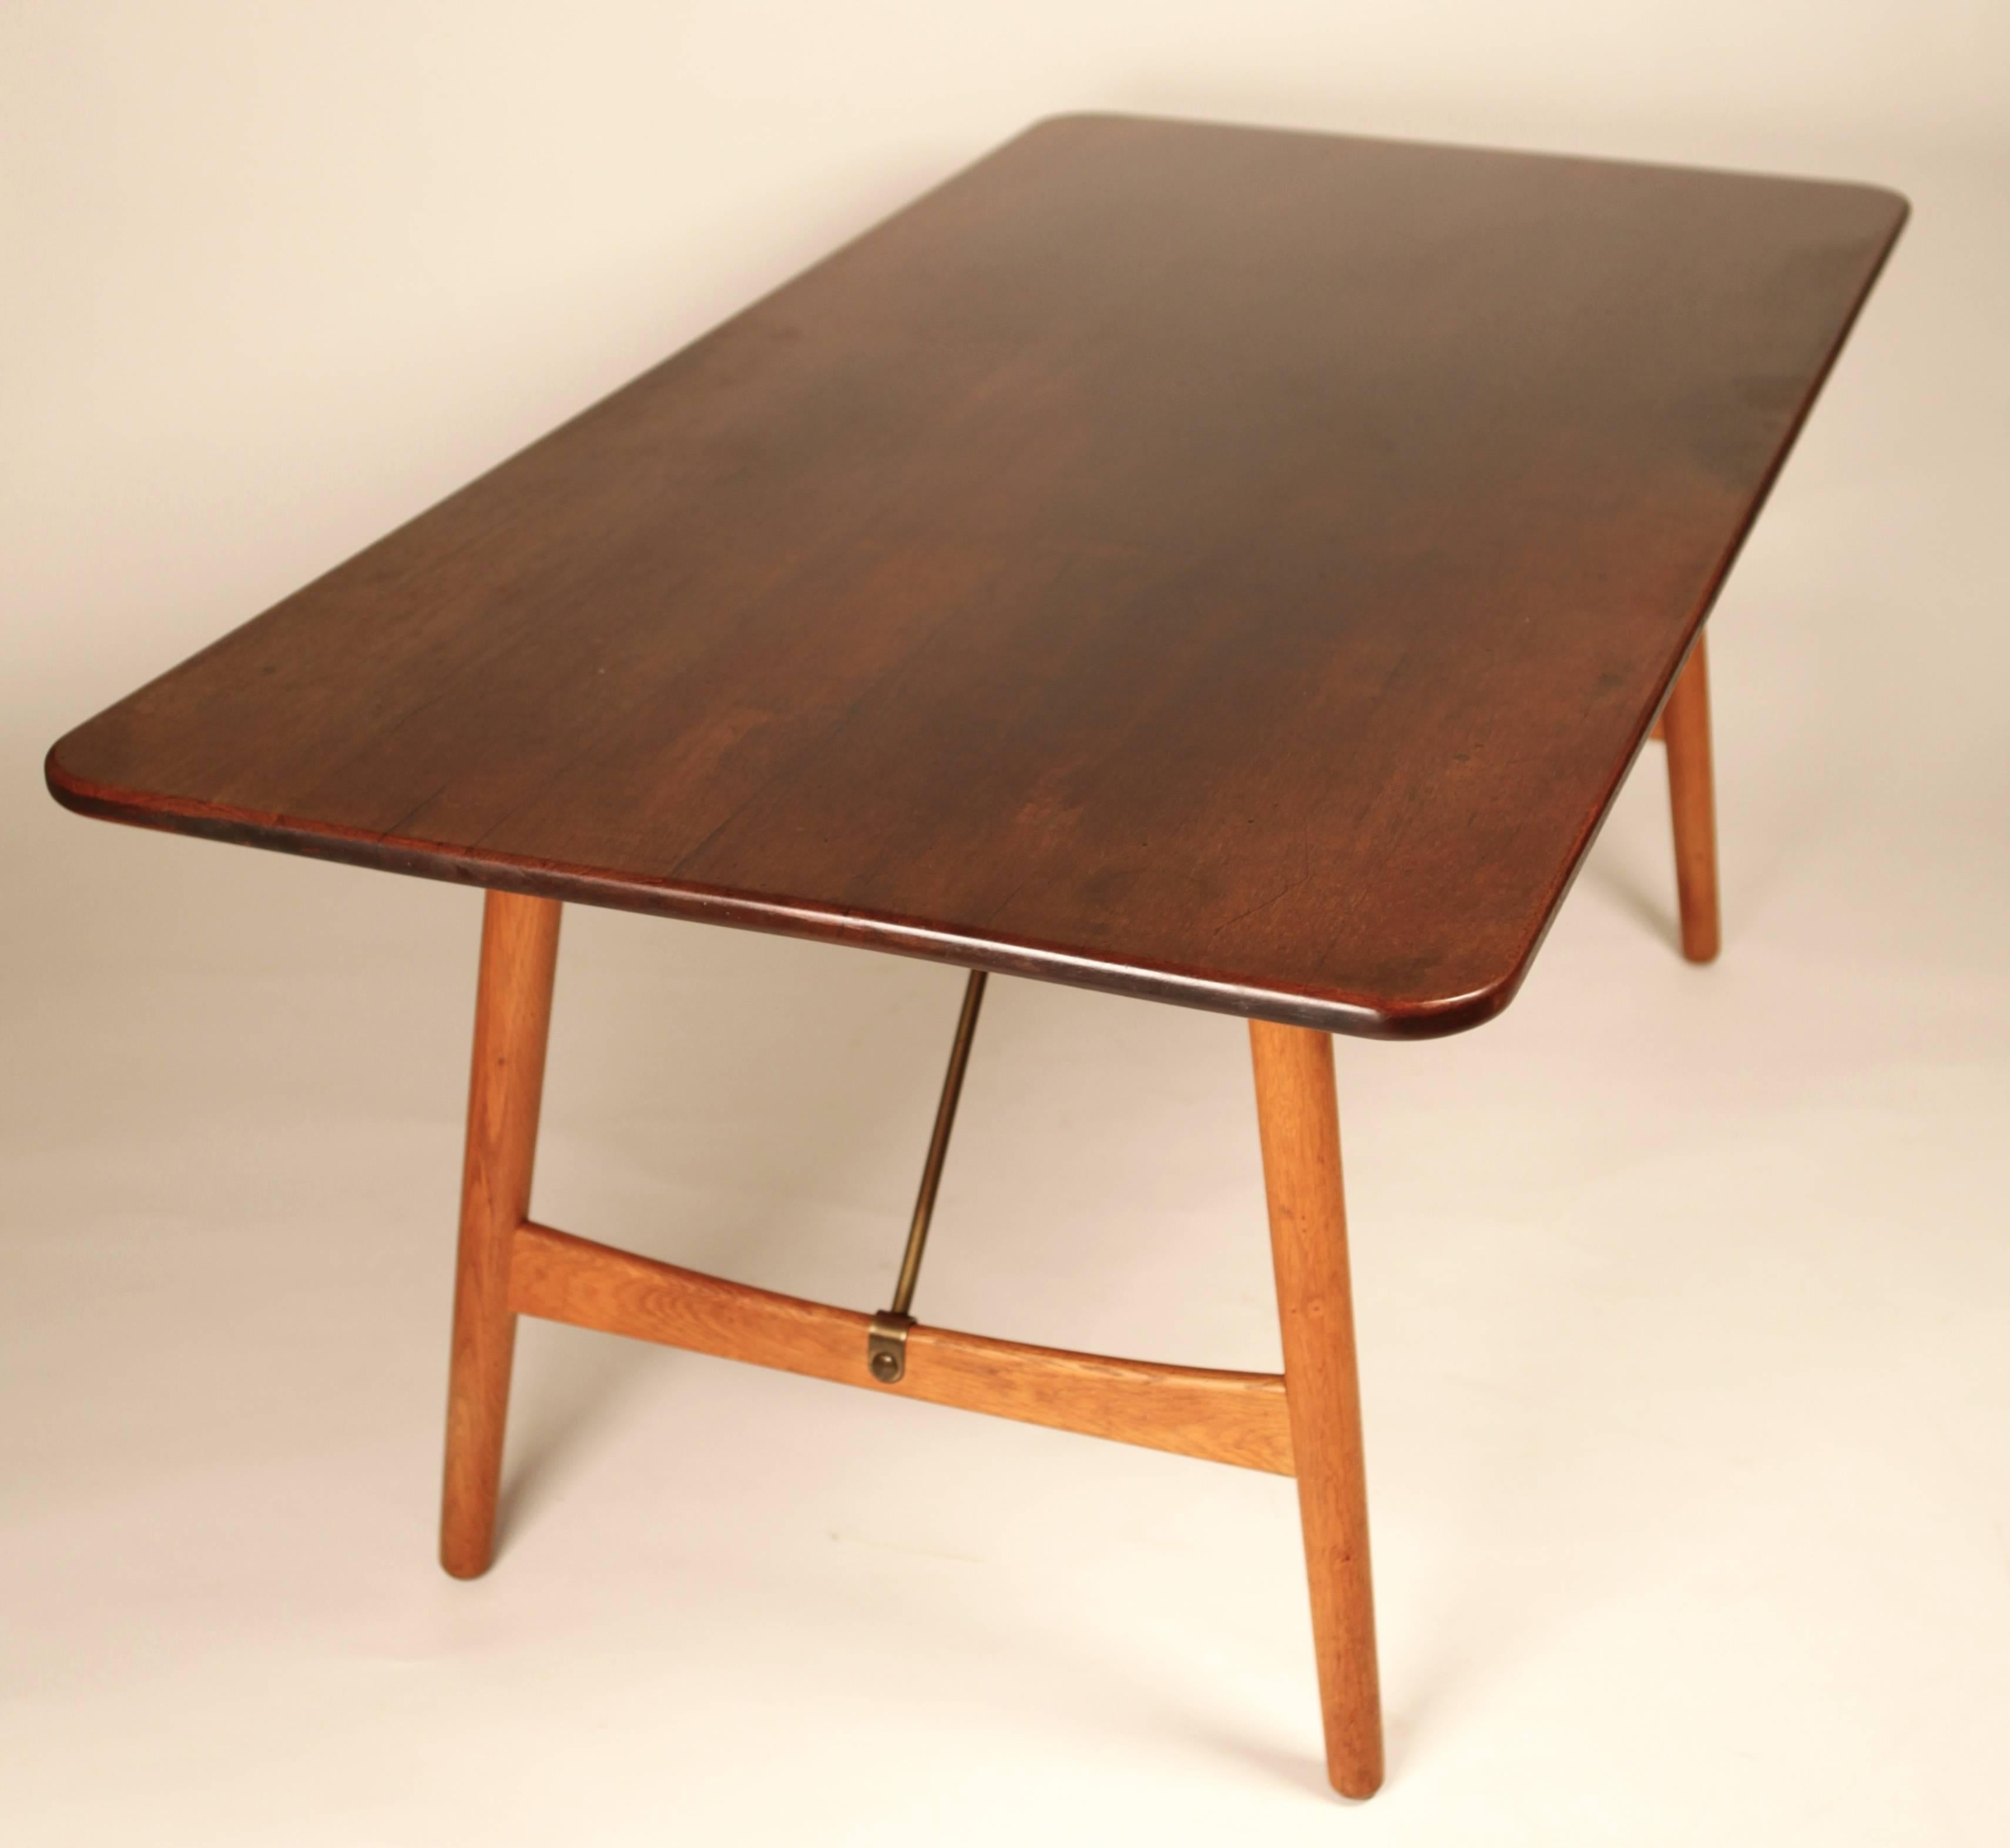 Borge Mogensen,
Hunting Table, solid teak top, oak legs and brass fittings,
designed in 1950,
produced by Soborg Mobelfabrik
Lit. Greta Jalk, Dansk mobelkunst through 40 years, pg. 154-155